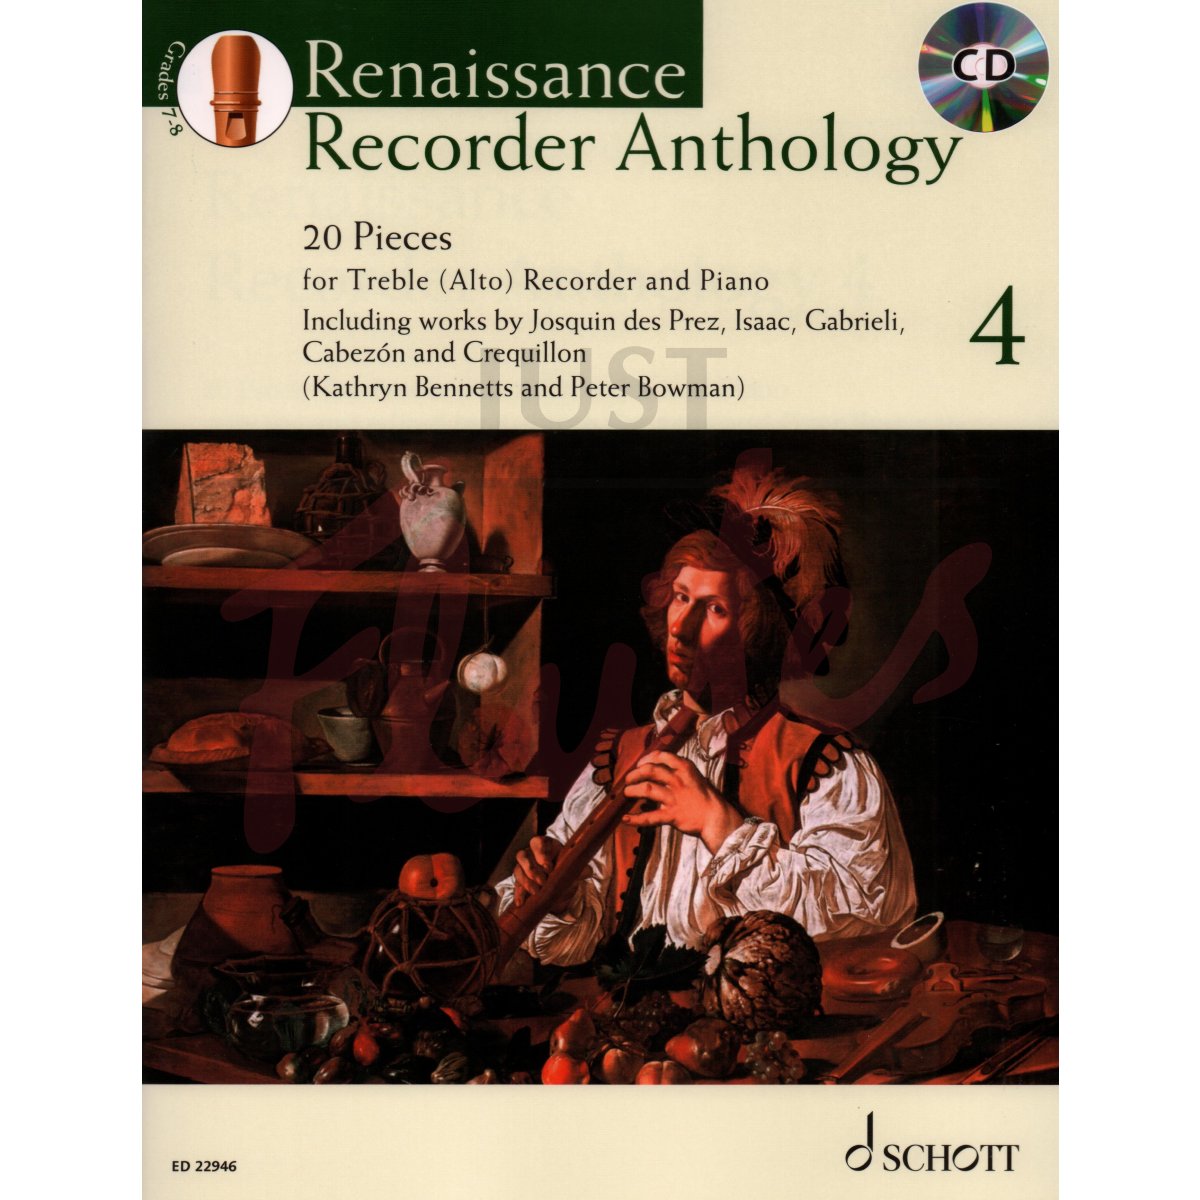 Renaissance Recorder Anthology